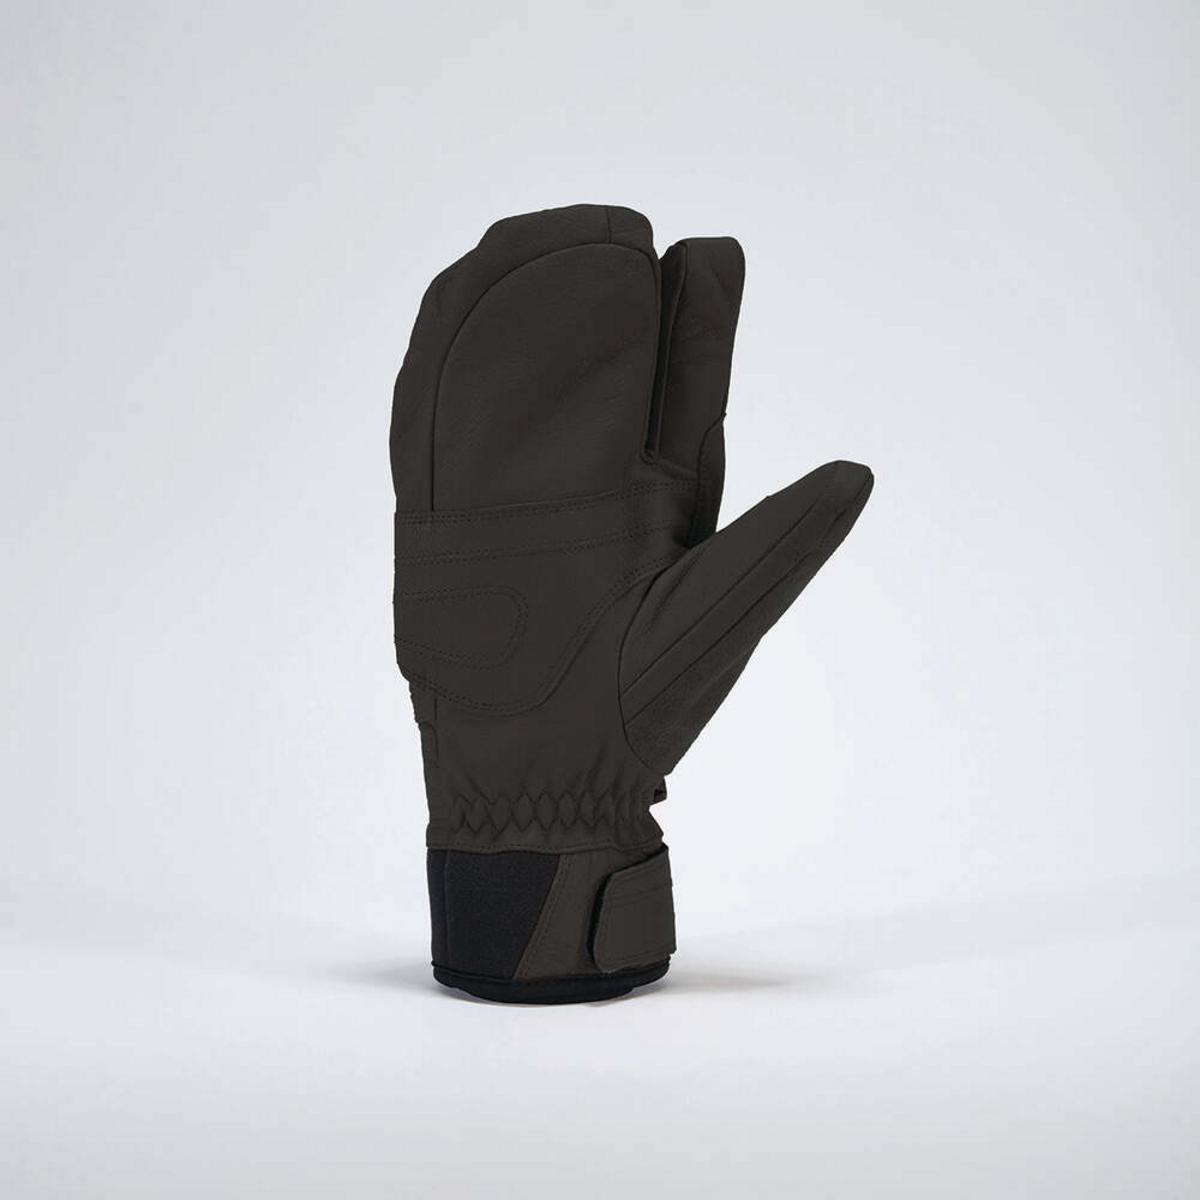 Gordini Men's Cirque 3-Finger Gloves